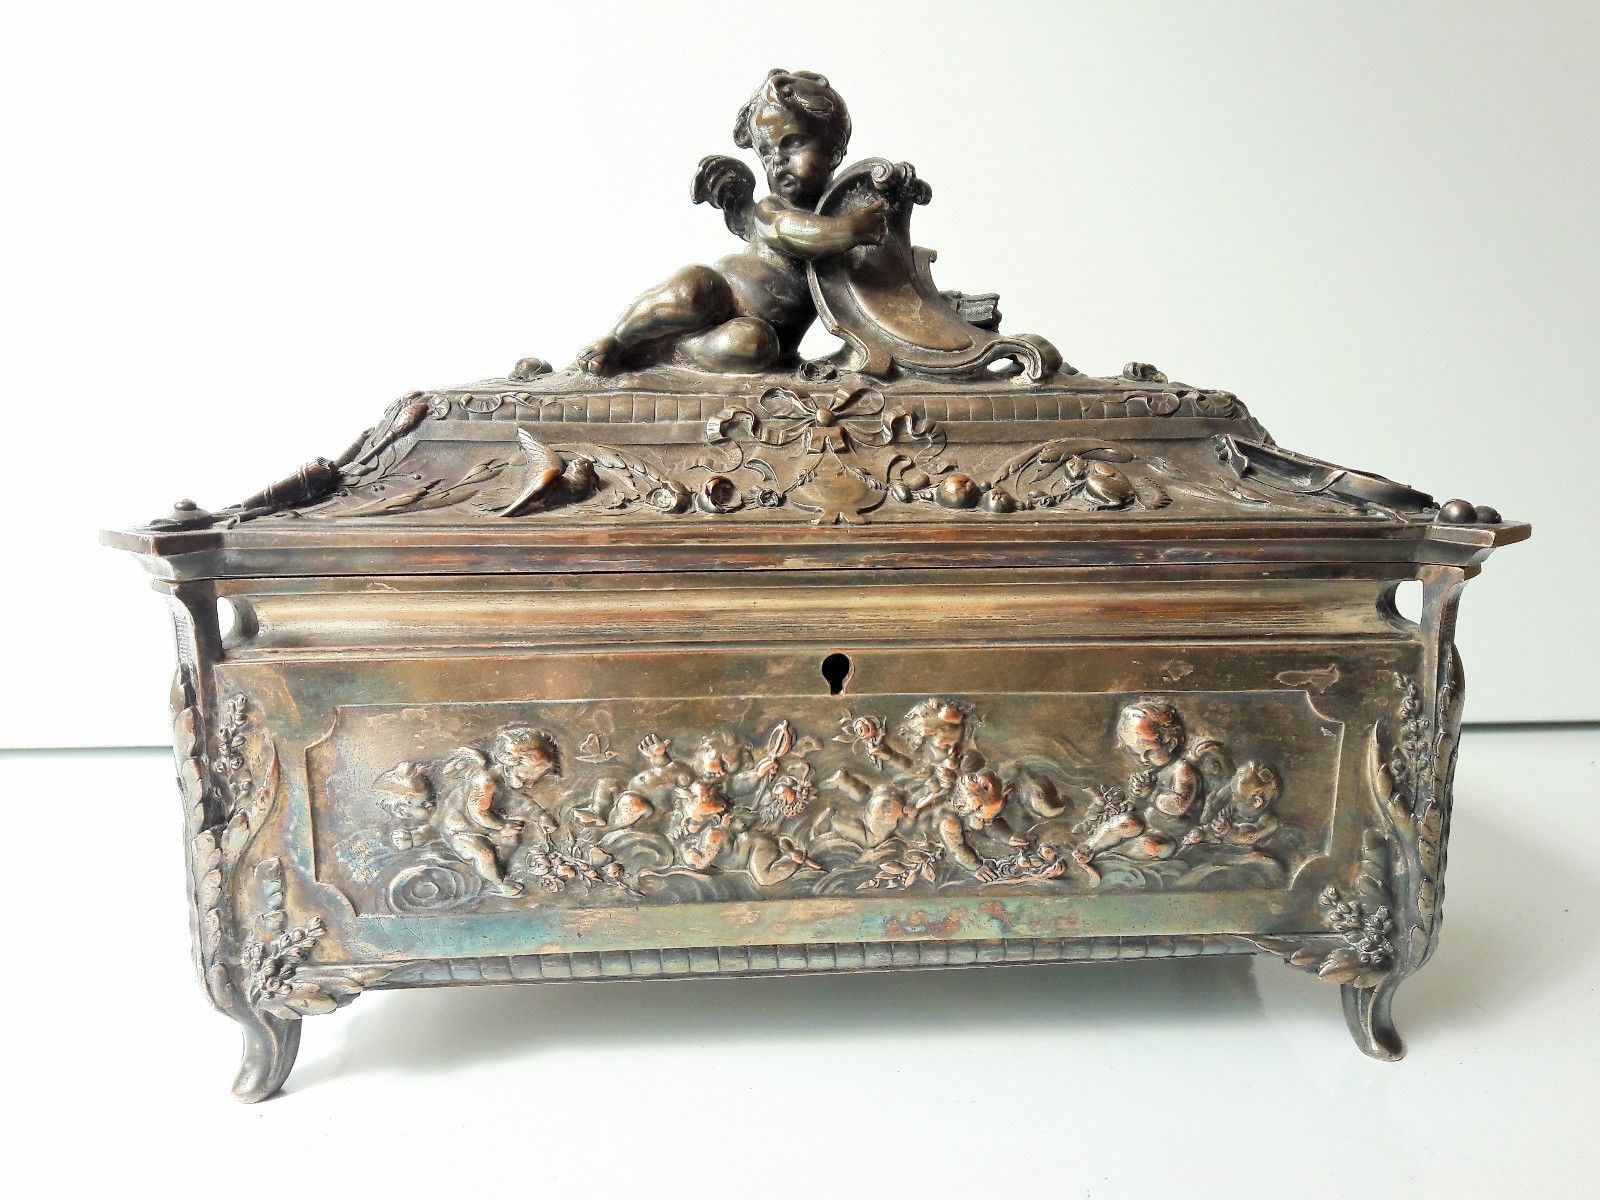 NICE ANTIQUE 1880 FRENCH SILVERED BRONZE CHERUB JEWELRY BOX CASKET F BARBEDIENNE